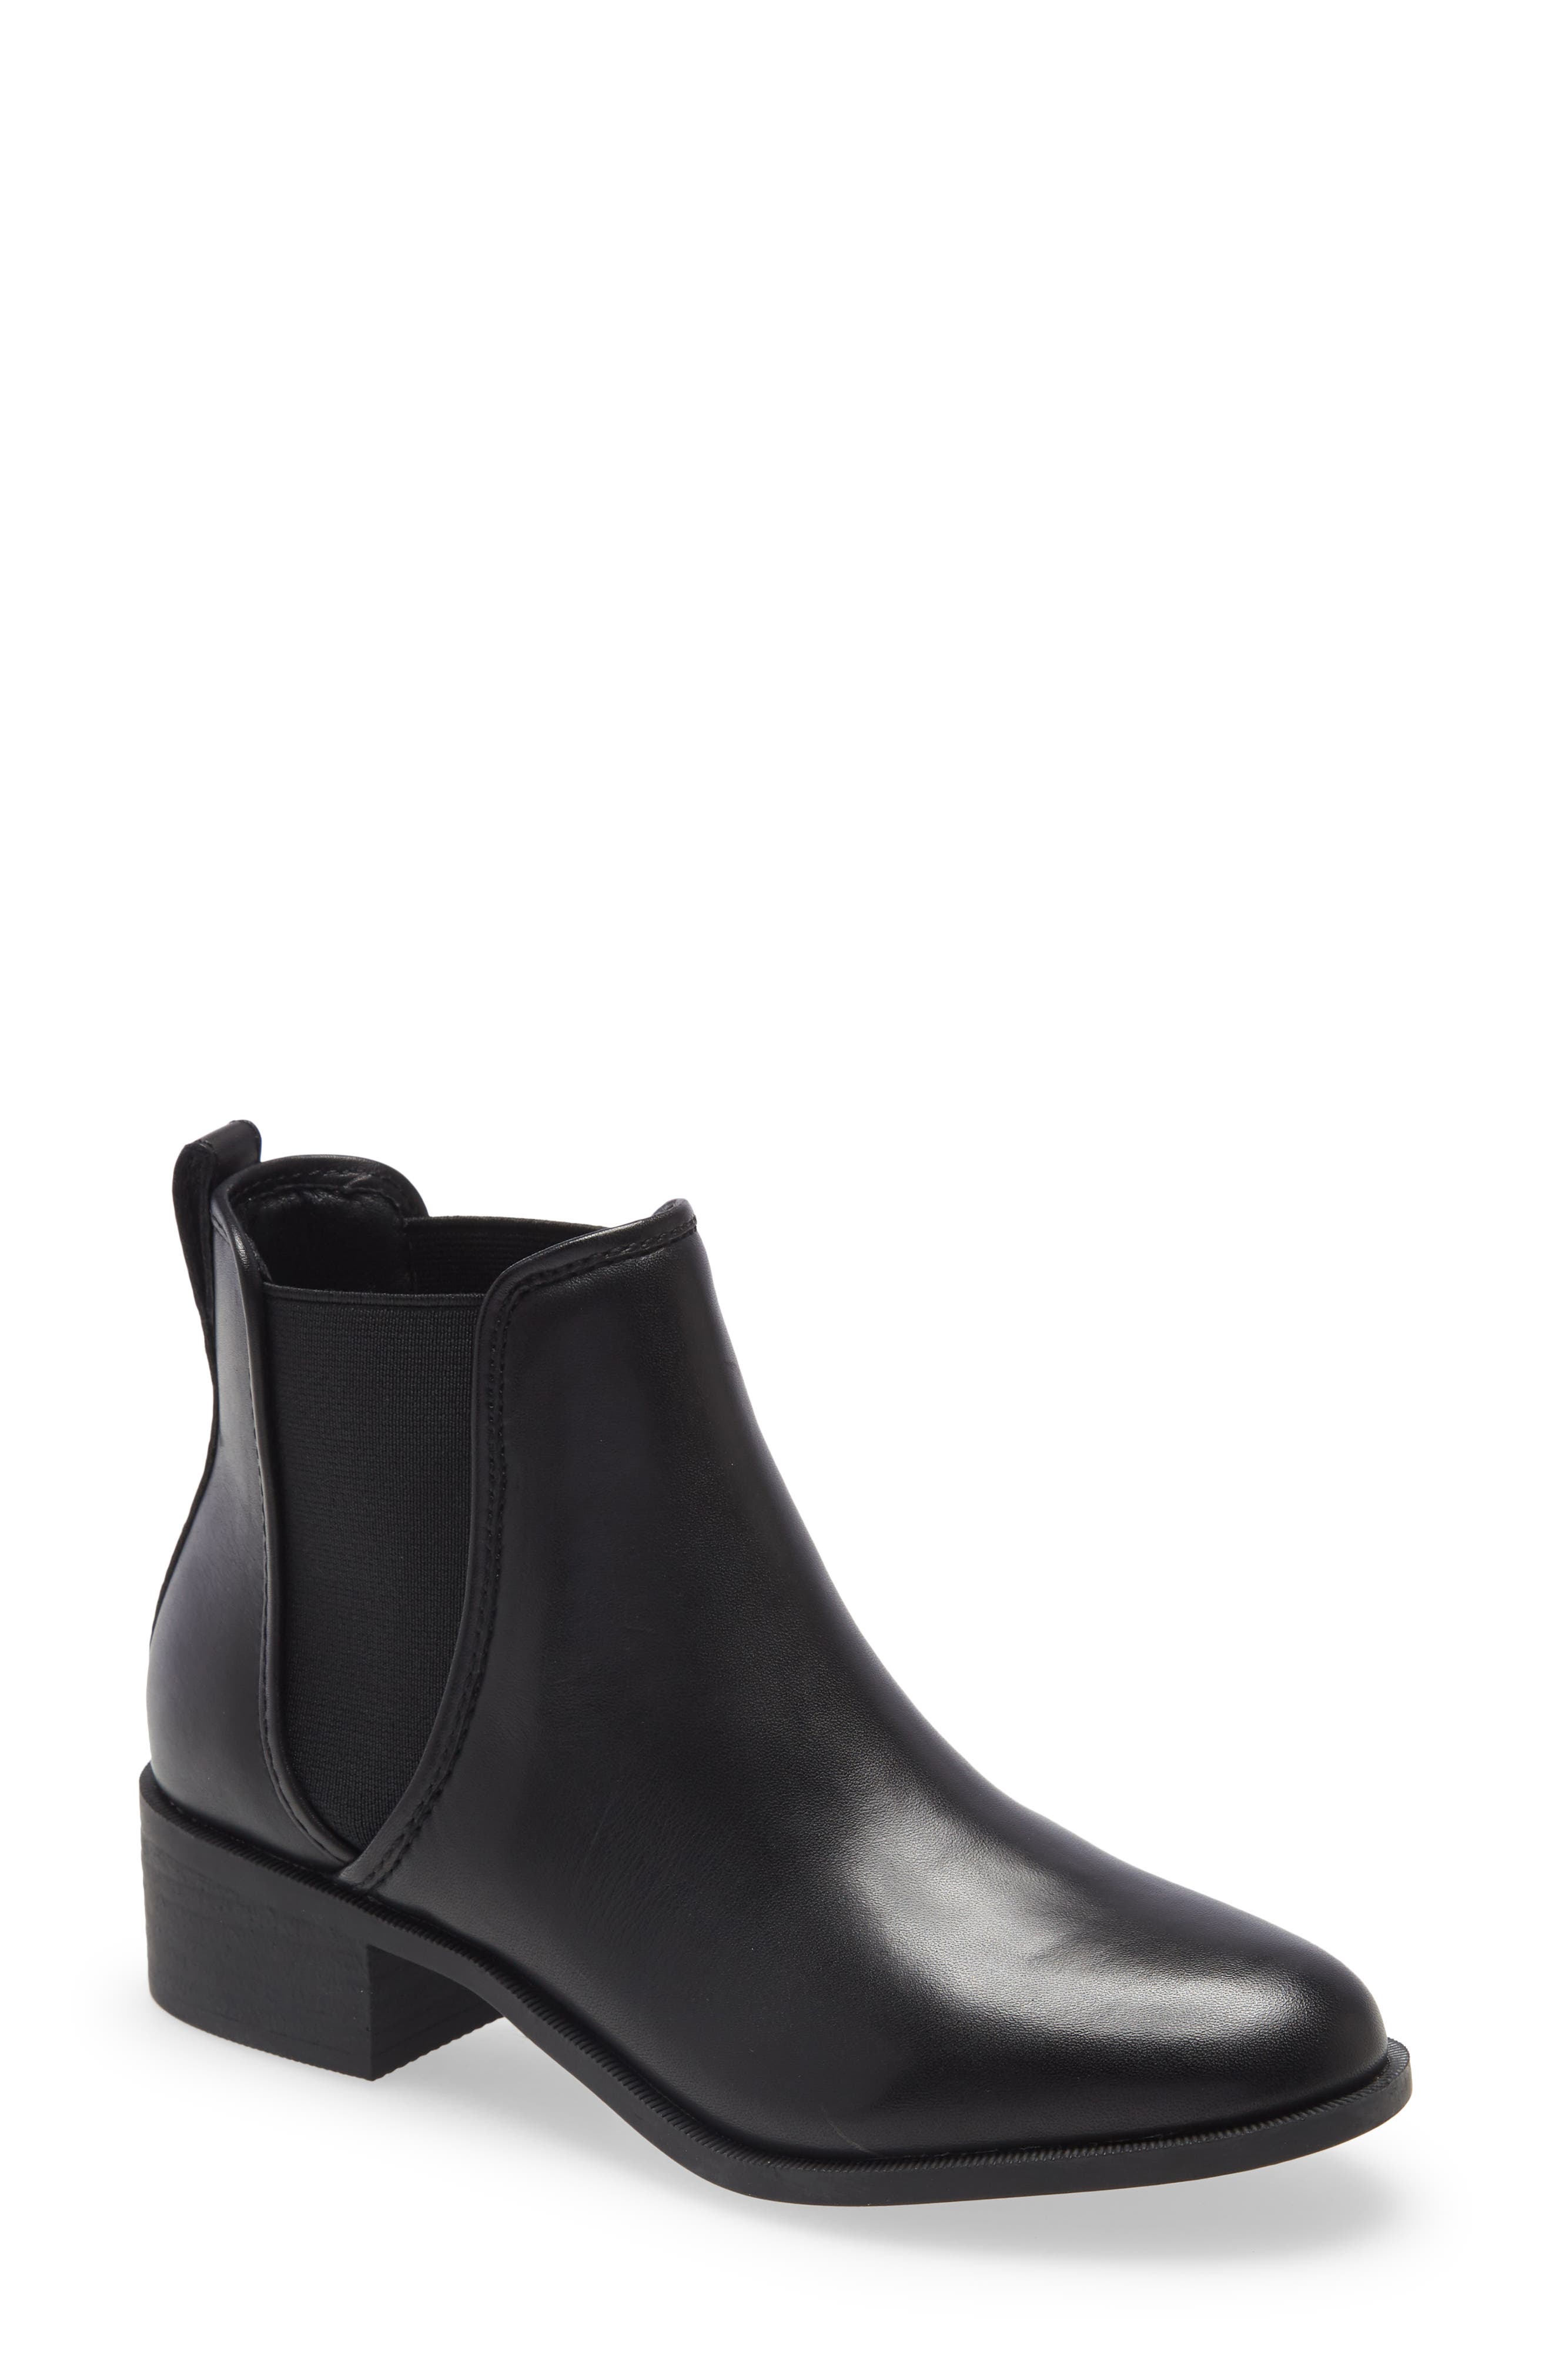 ladies black leather ankle boots sale